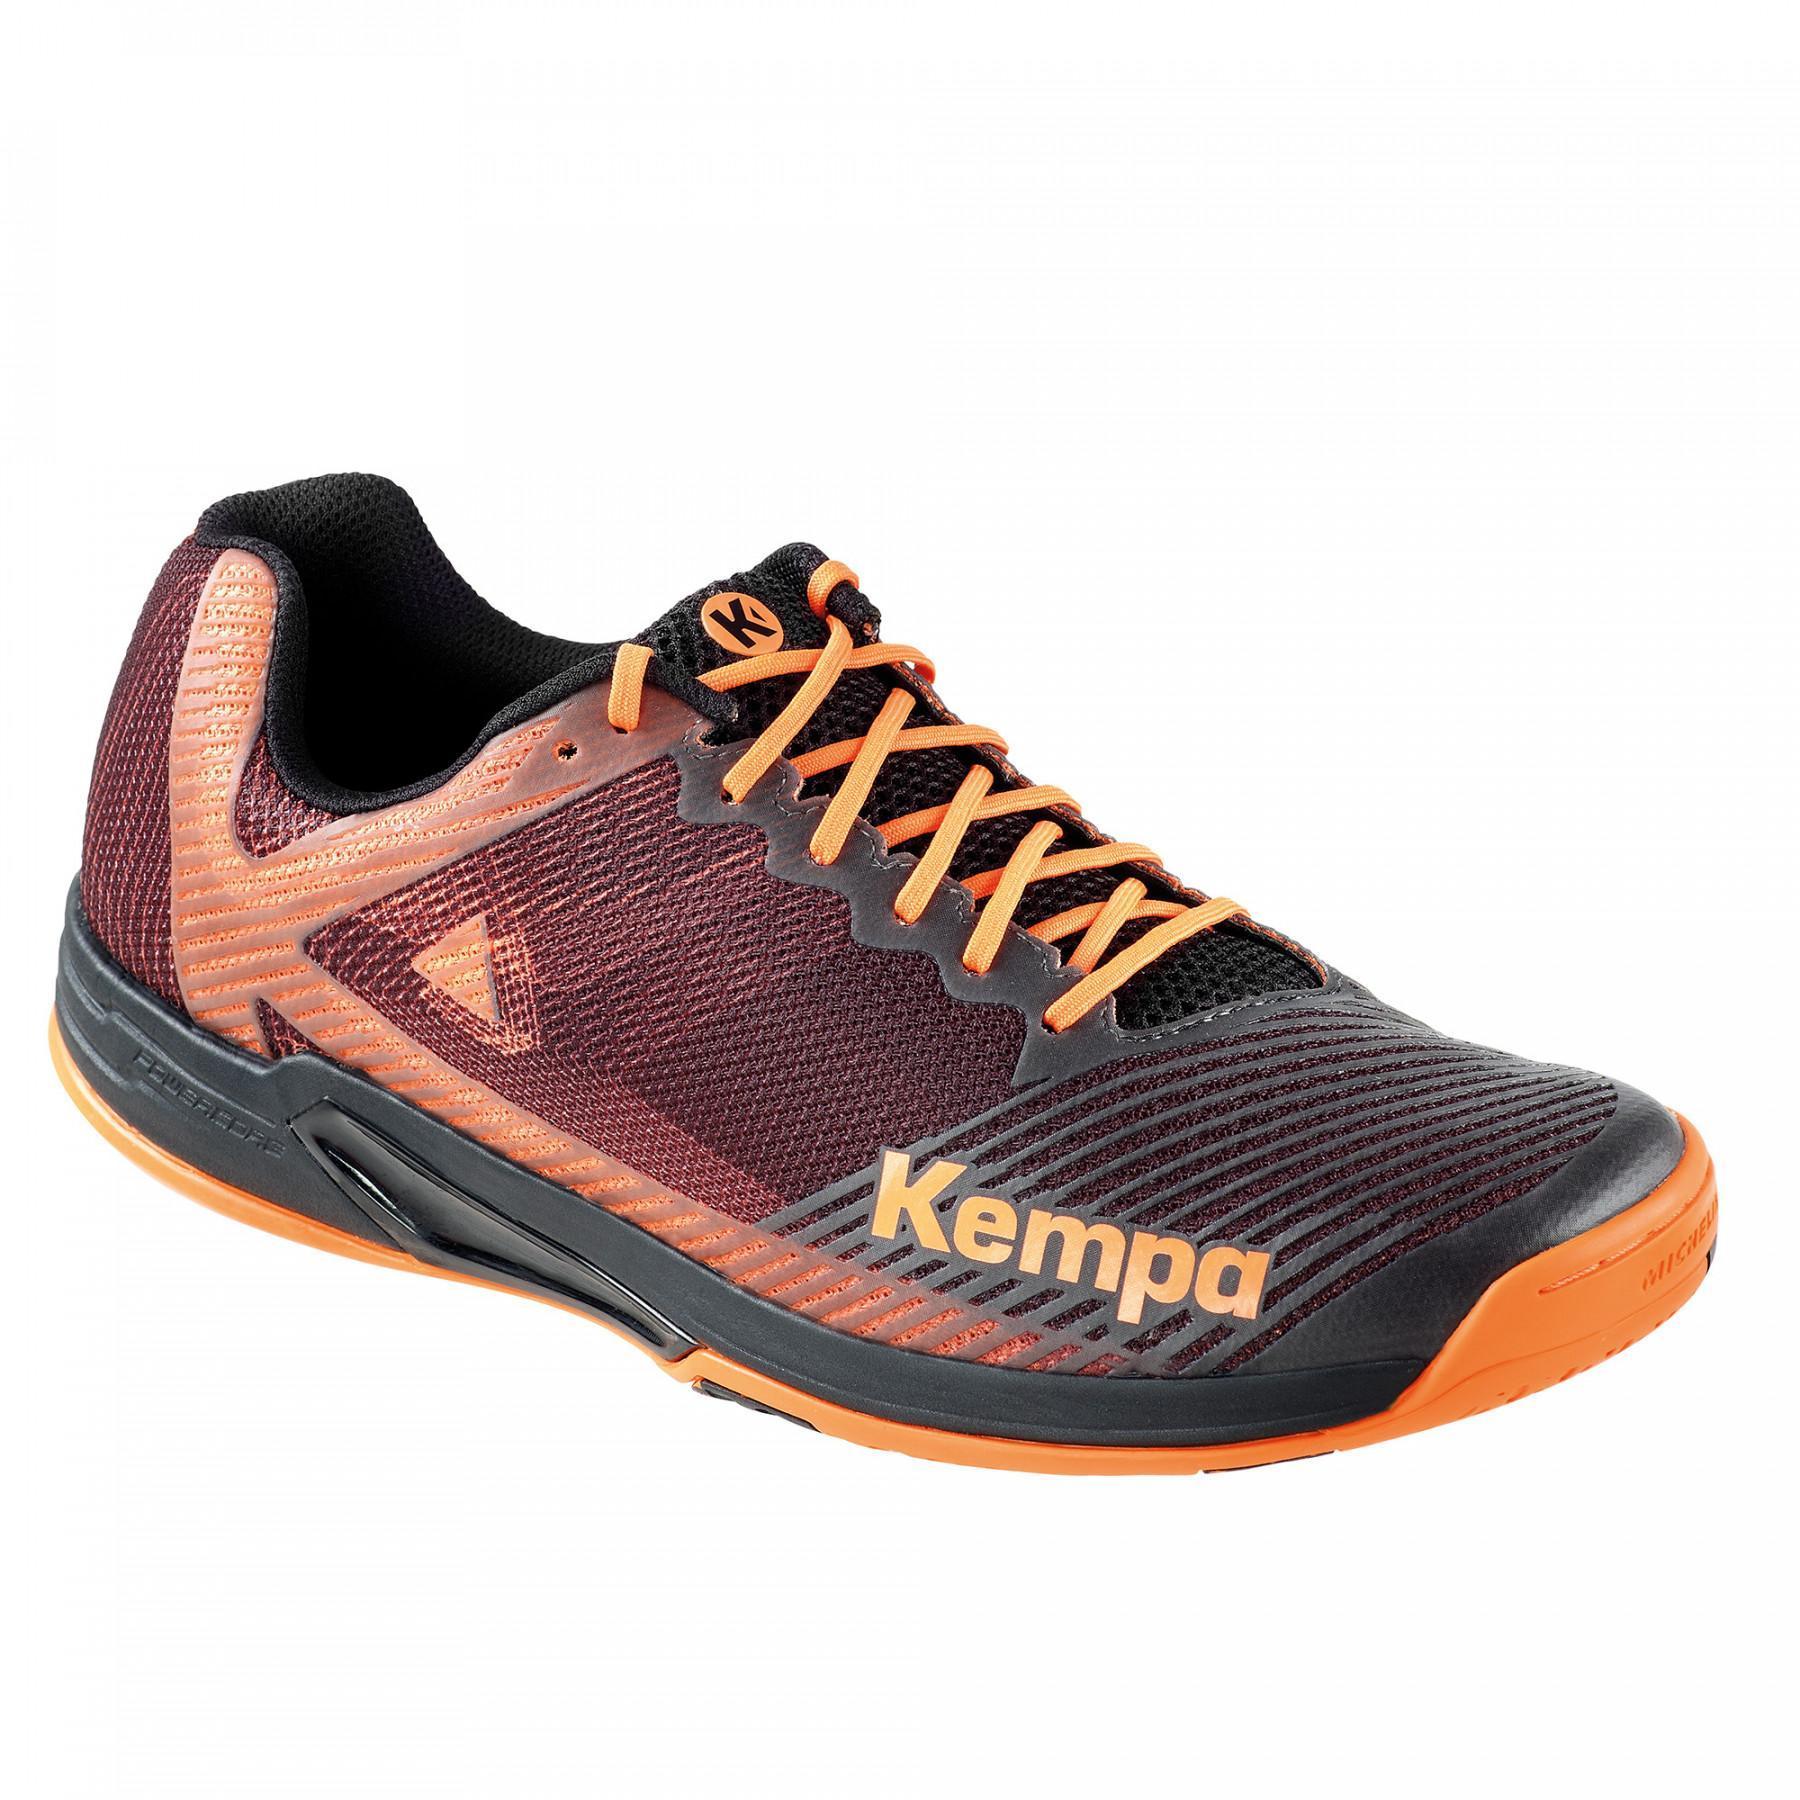 Shoes Kempa Wing 2.0